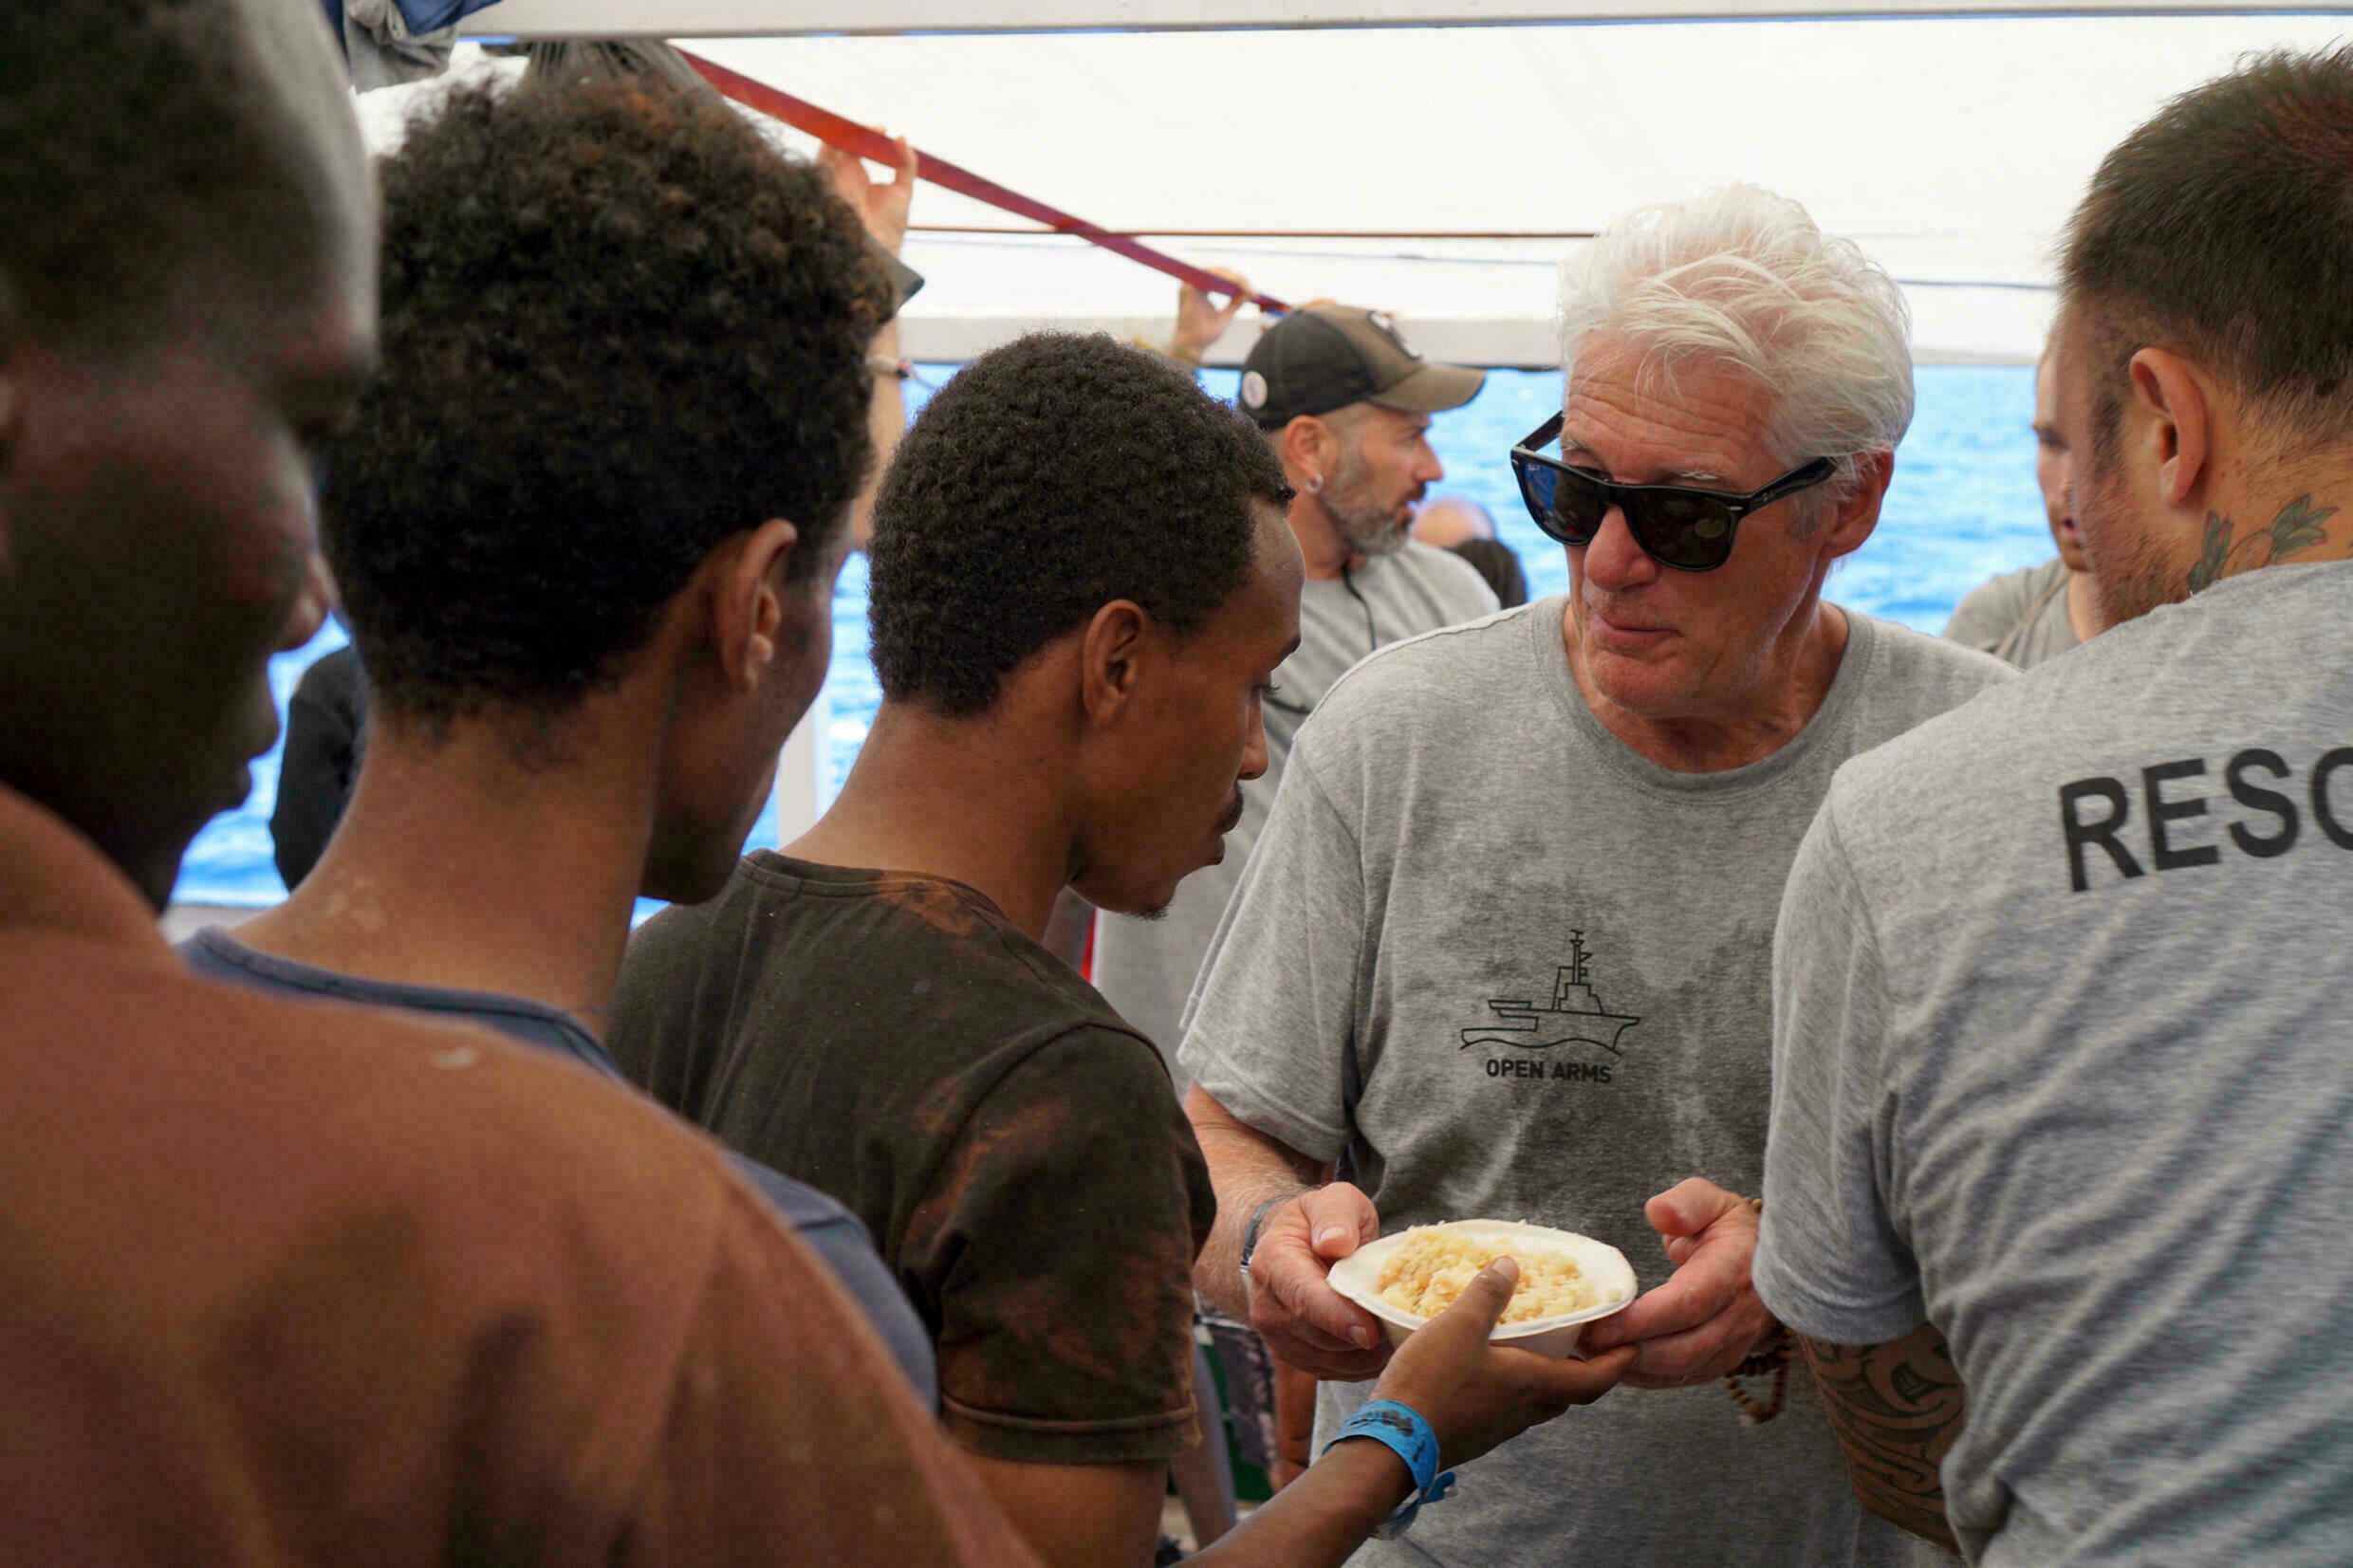 Hollywood-Ikone Richard Gere hilft am 9. August 2019 an Bord des Open Arms-Schiffes, Migranten Mahlzeiten zu servieren.